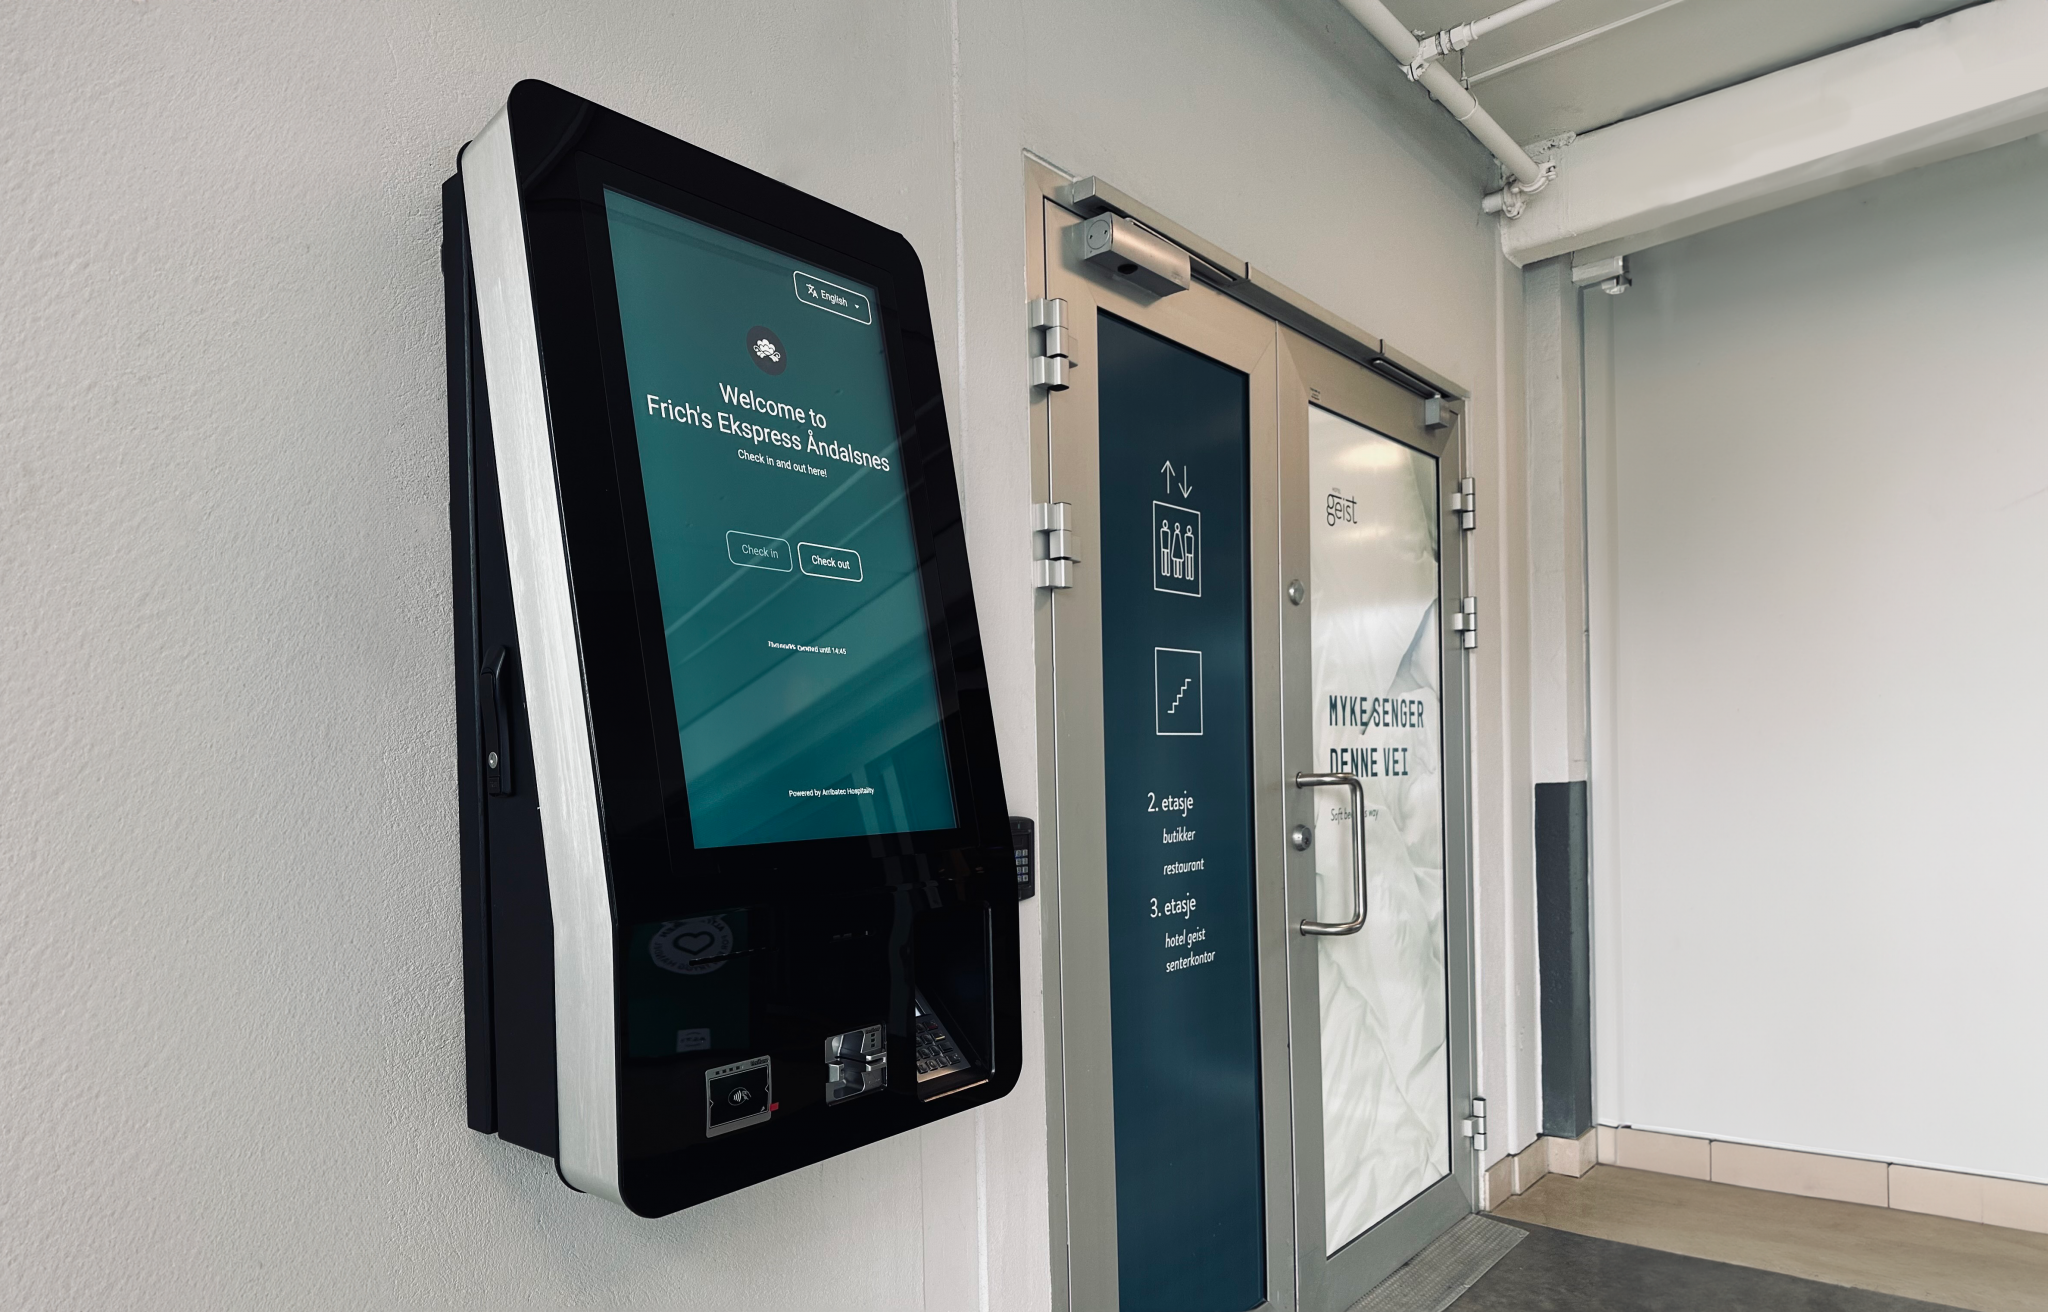 Frichs Ekspress Åndalsnes installed a completely unmanned check-in kiosk